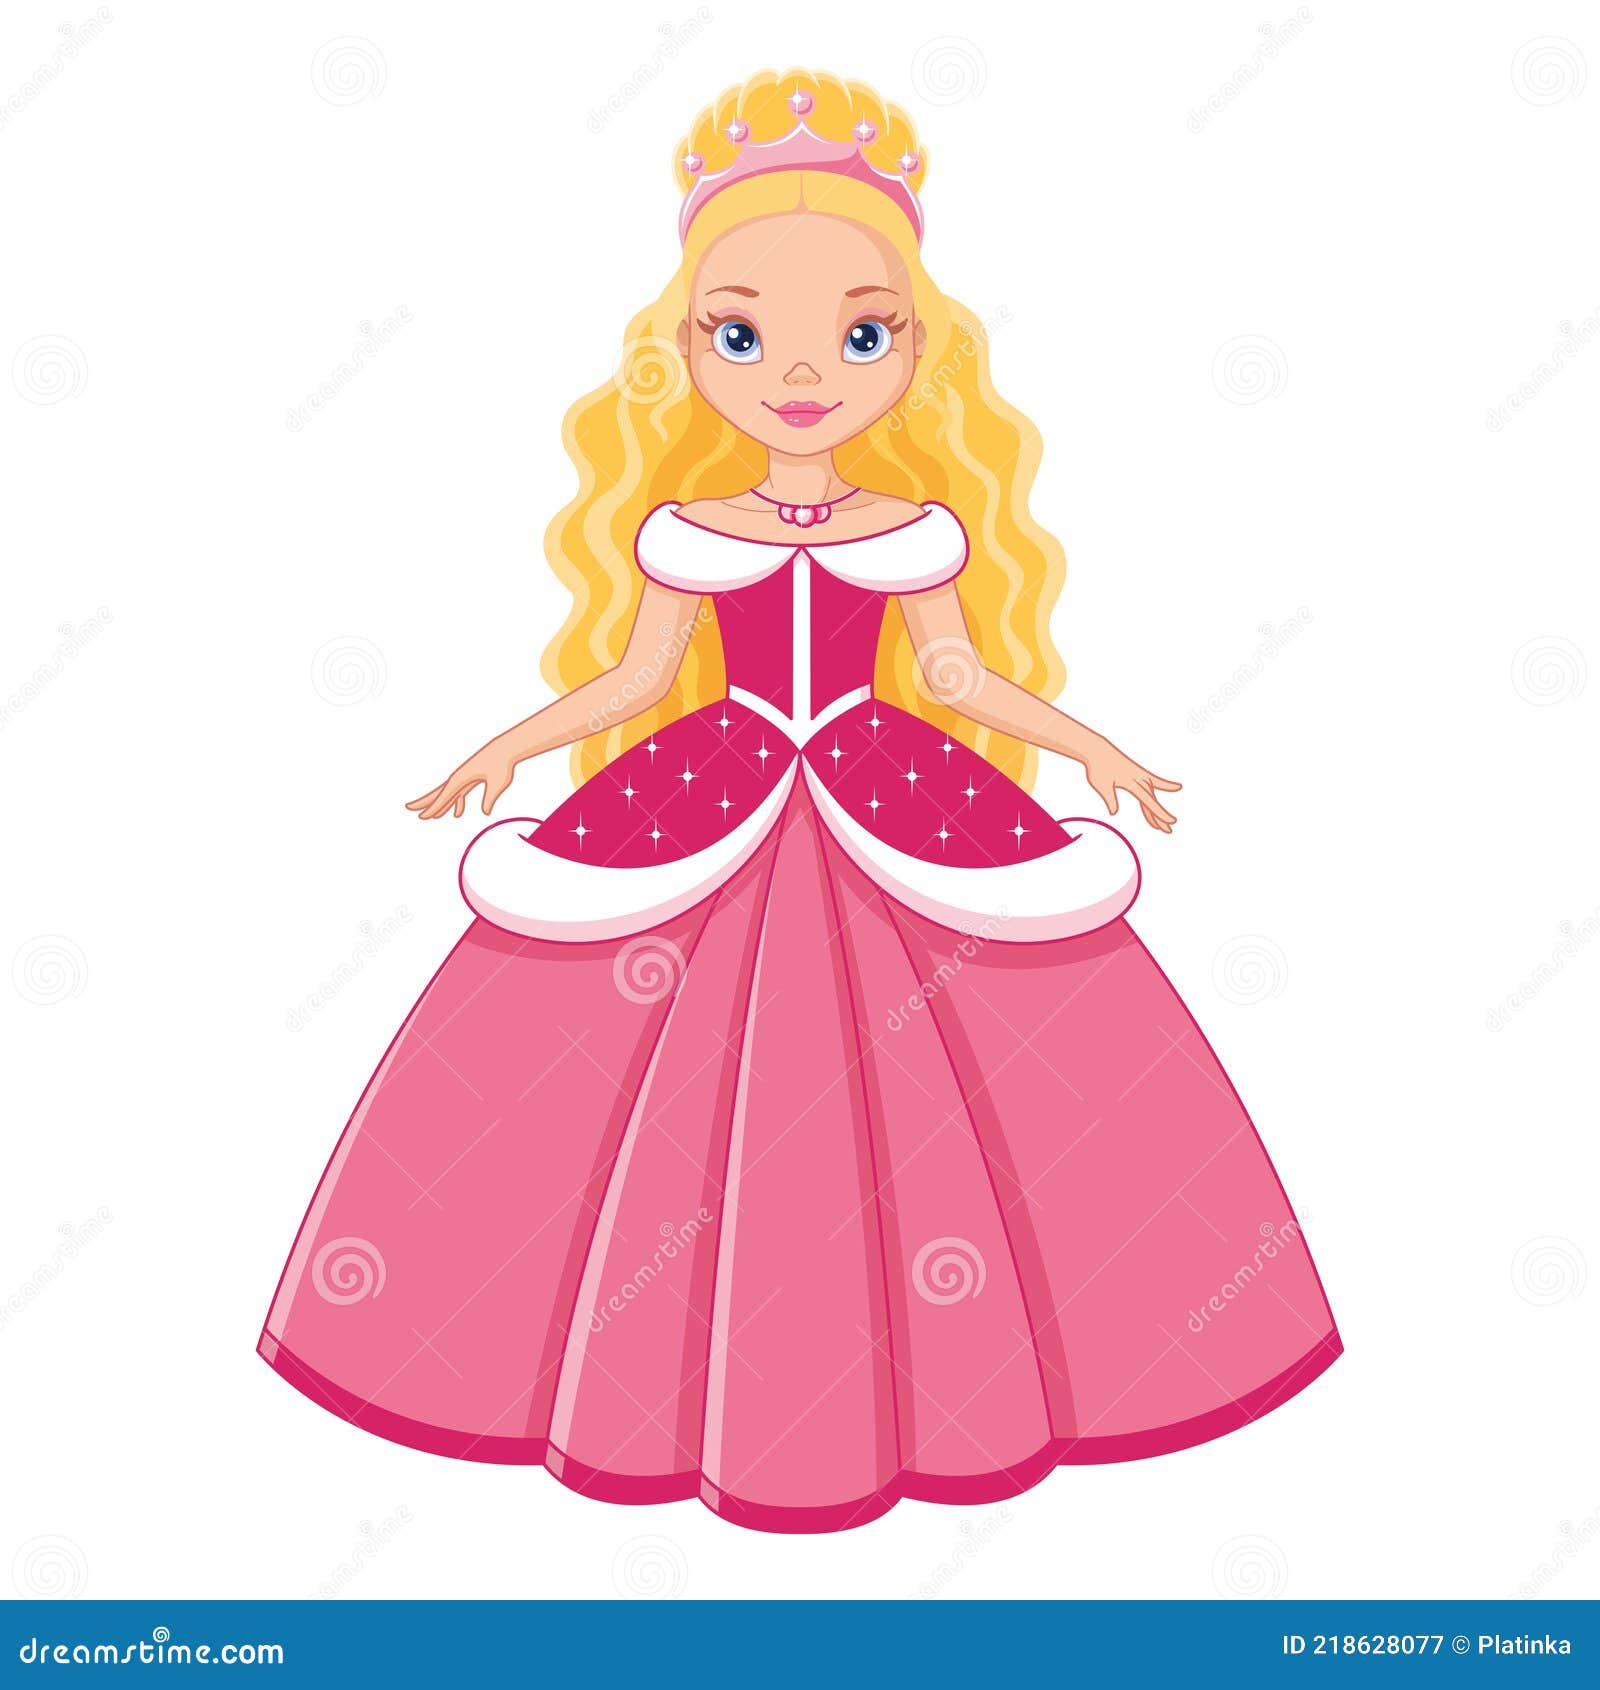 Beautiful Princess in Pink Dress Stock Vector - Illustration of blonde,  crown: 218628077